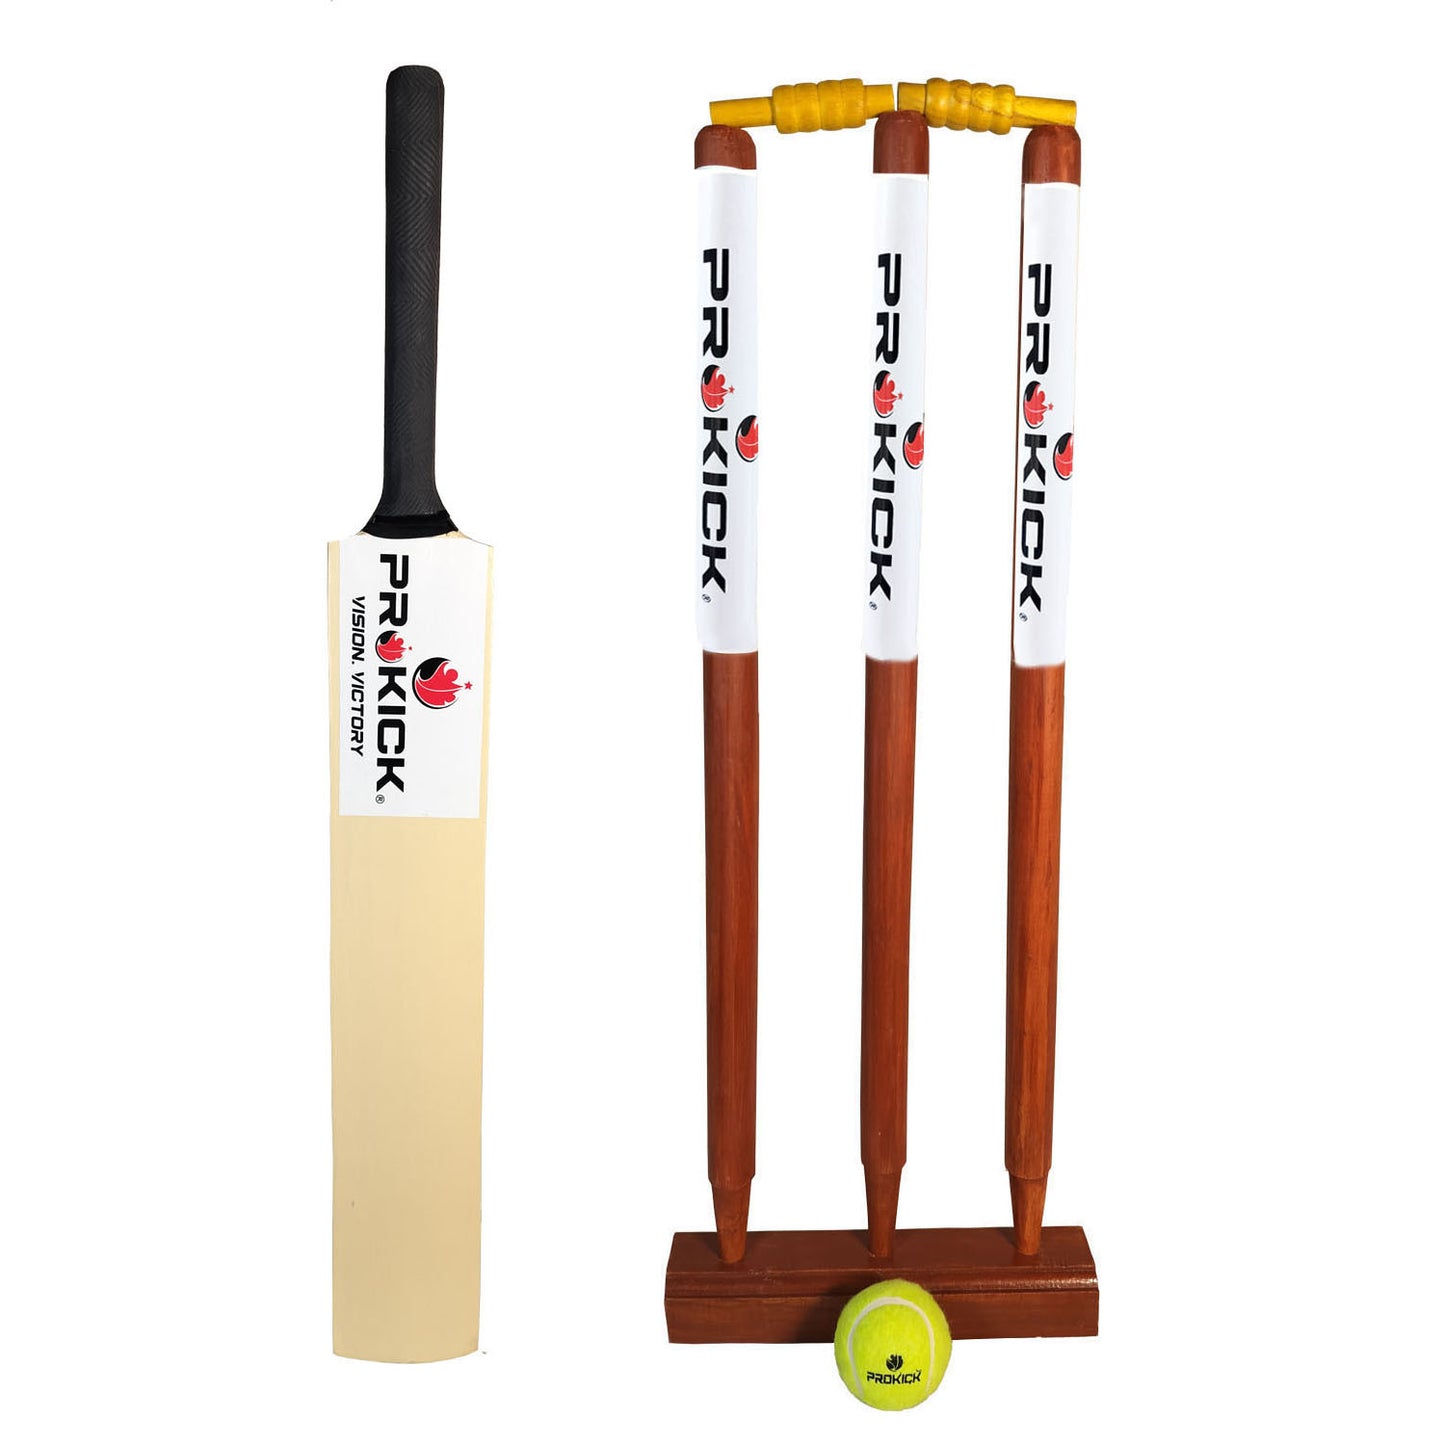 Prokick Wooden Cricket Kit - Best Price online Prokicksports.com